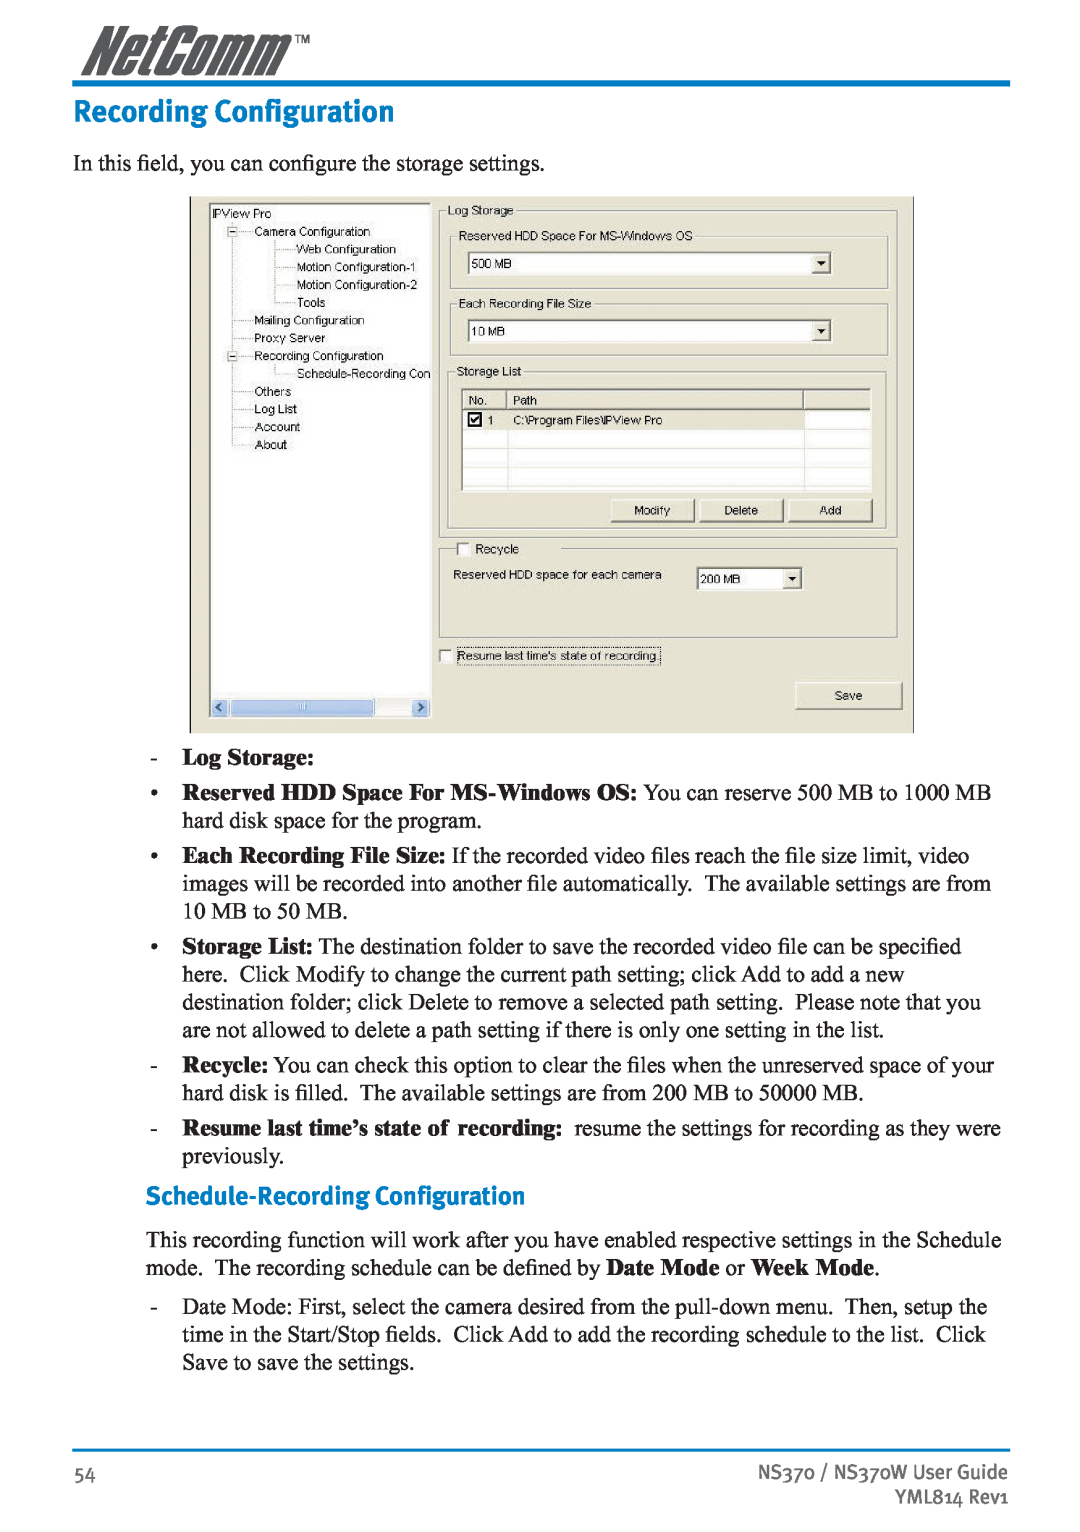 NetComm NS370W manual Schedule-Recording Configuration, Log Storage 